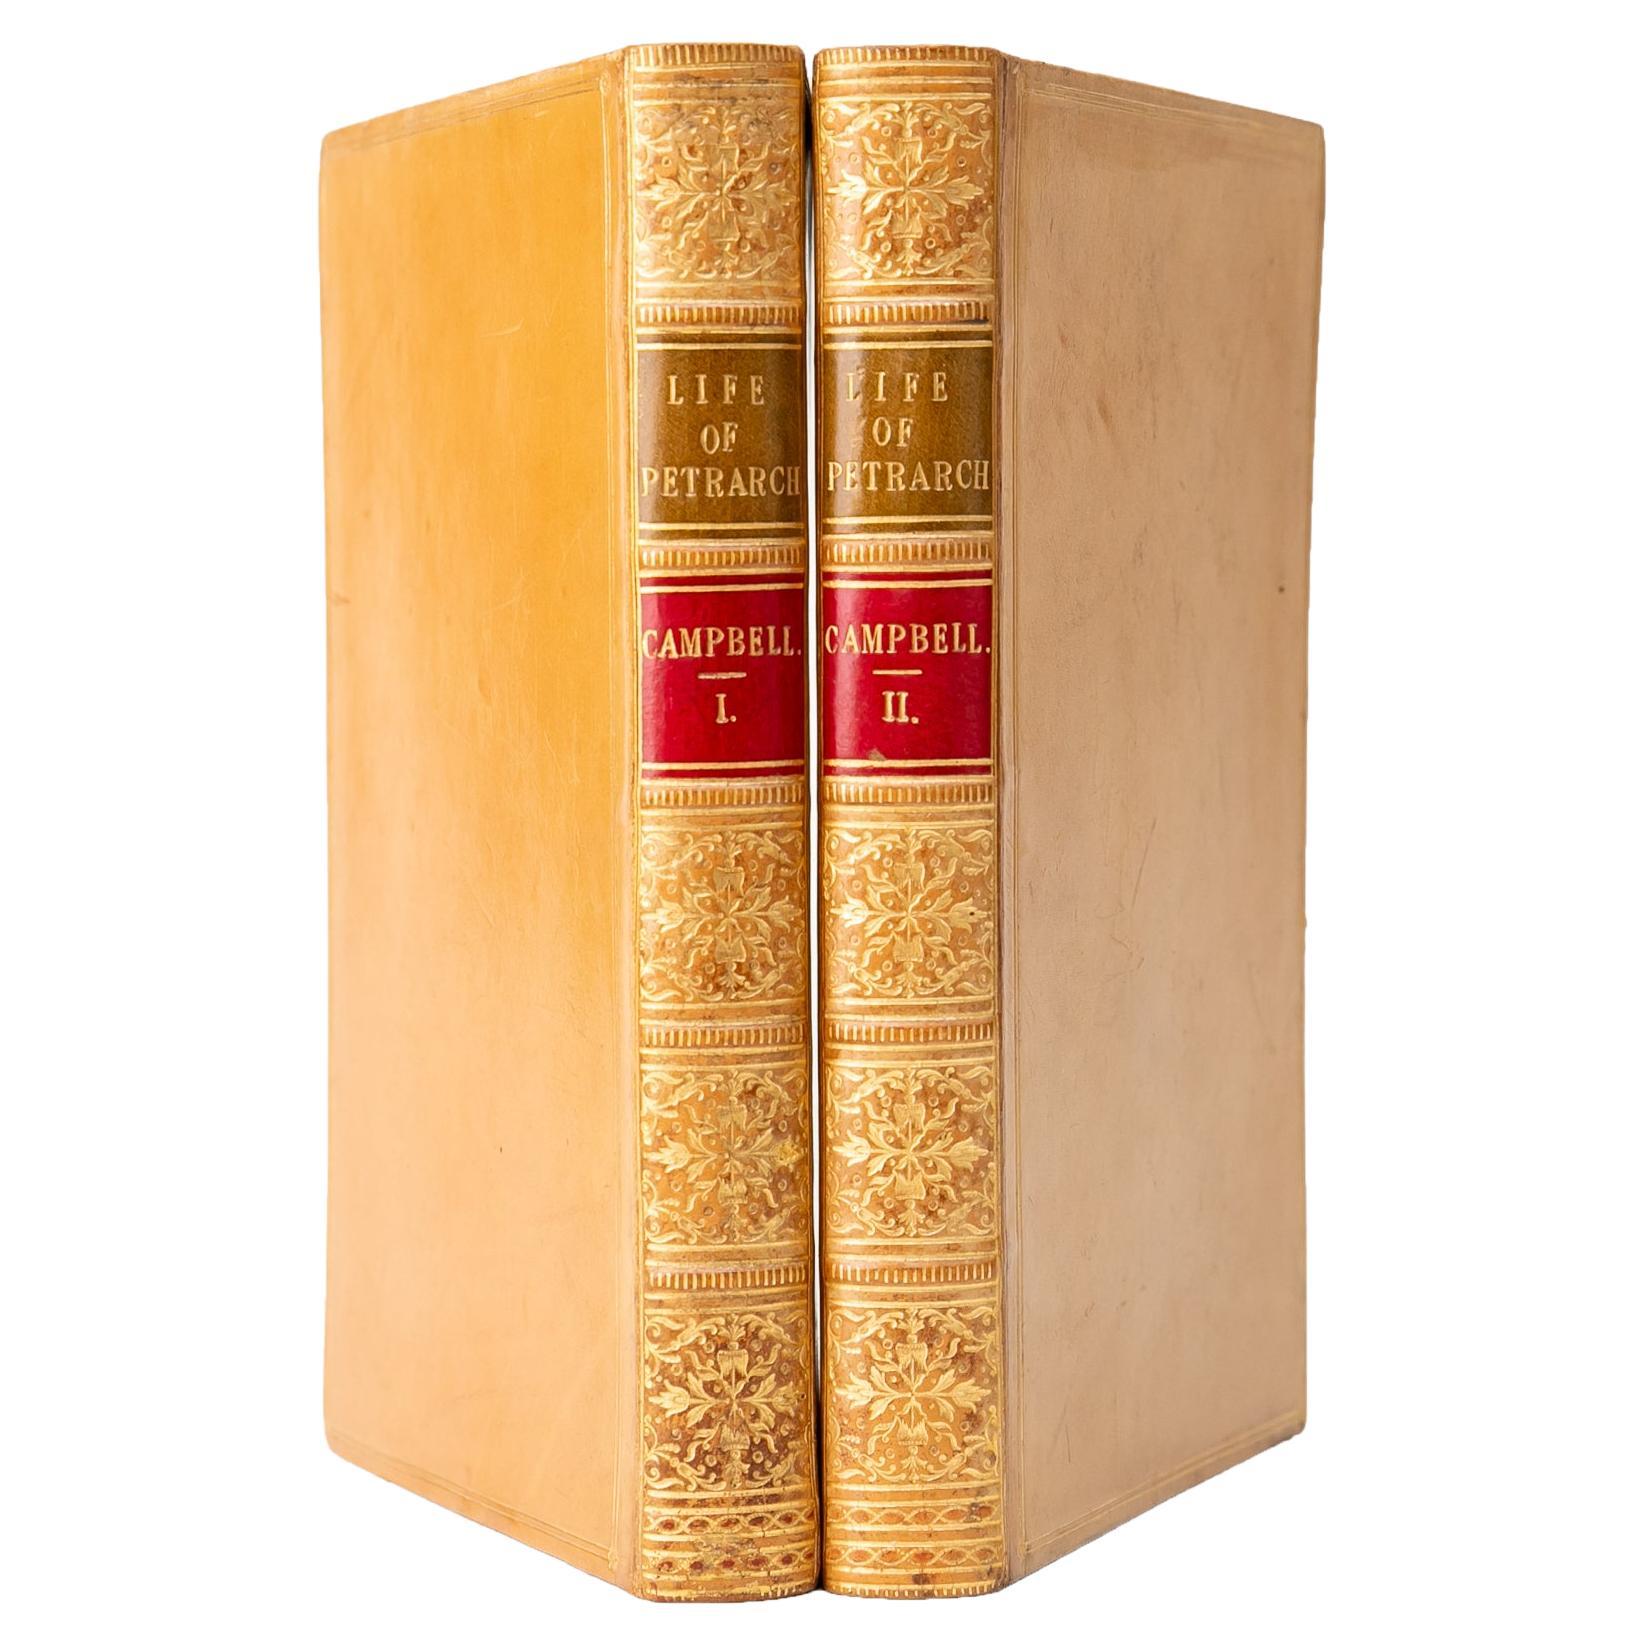 2 Volumes. Thomas Campbell, Life of Petrarch.